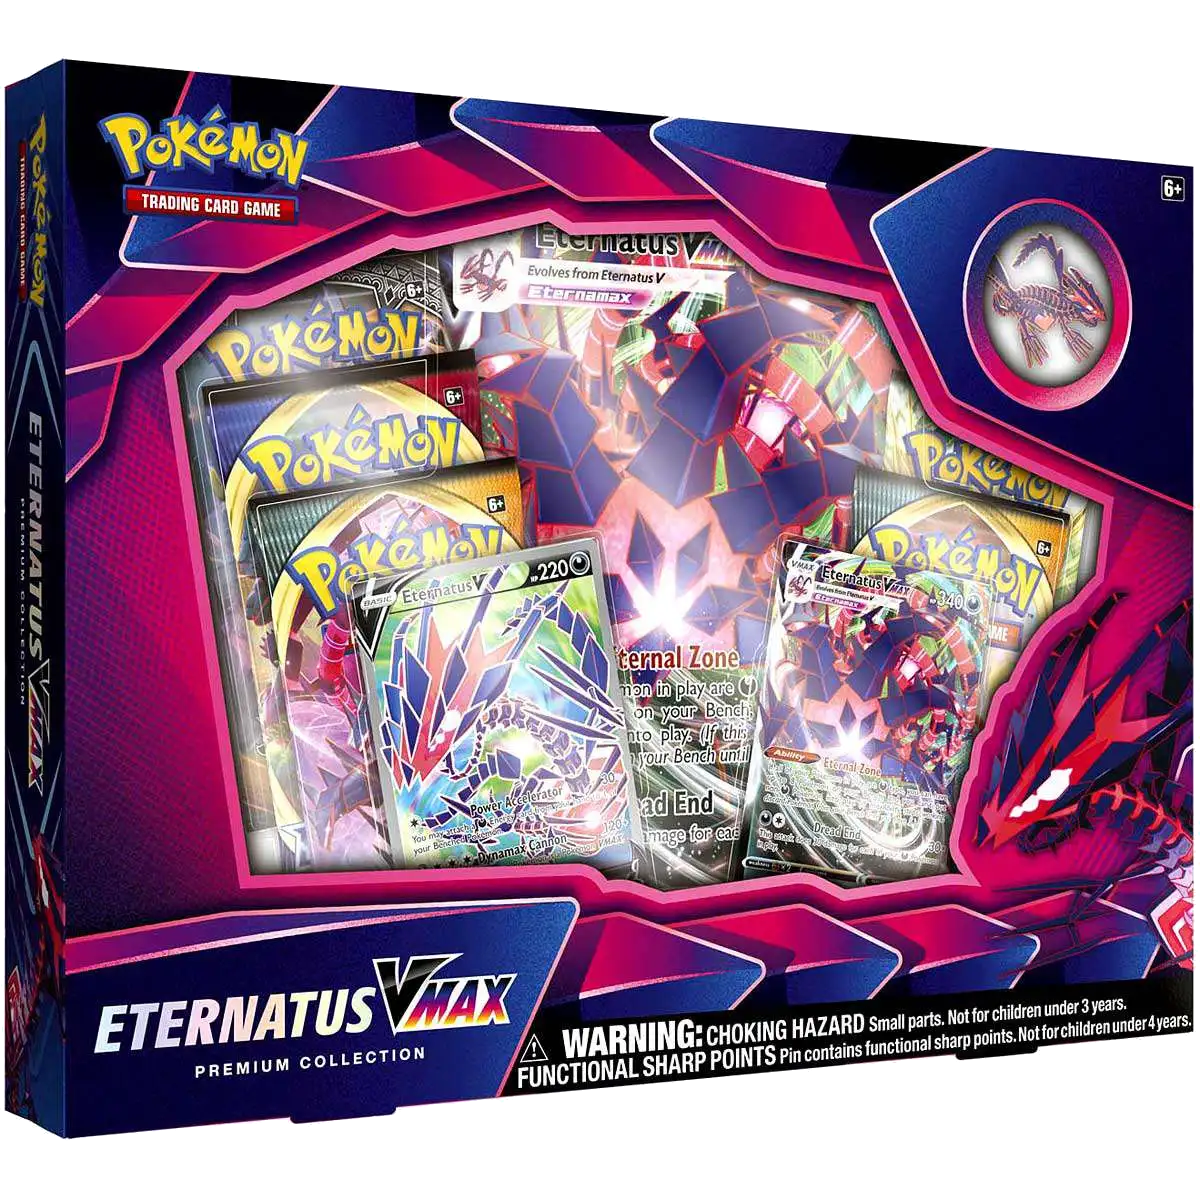 Pokémon - Premium Collection - Eternatus Vmax - 2020